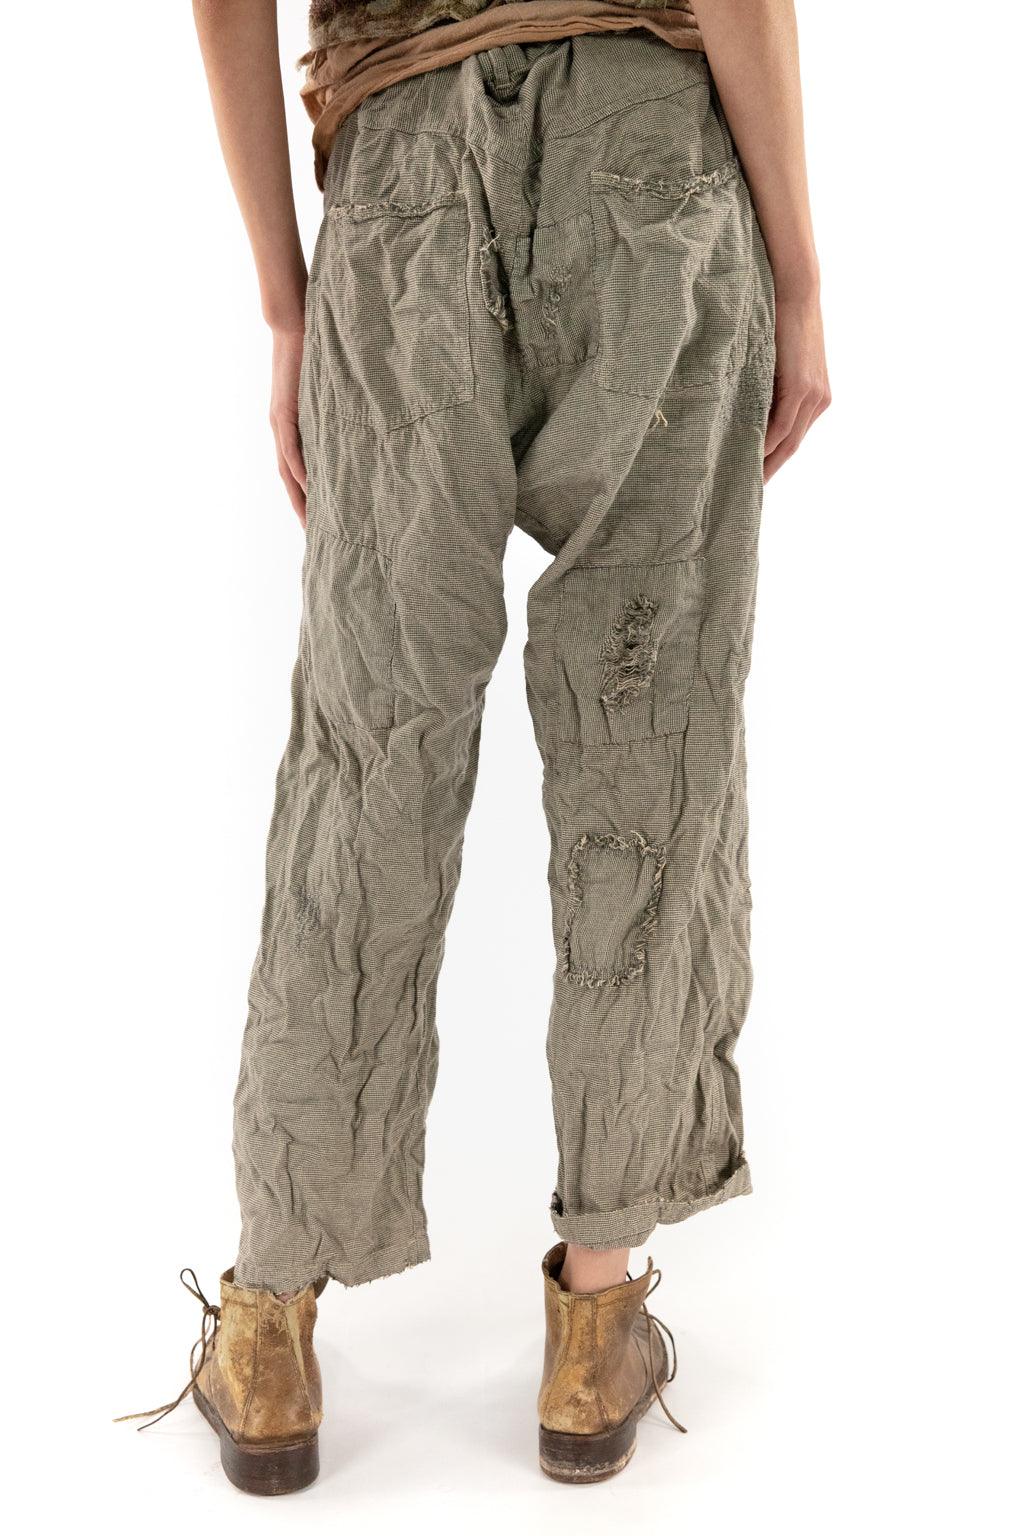 Miner Pants - Magnolia Pearl Clothing